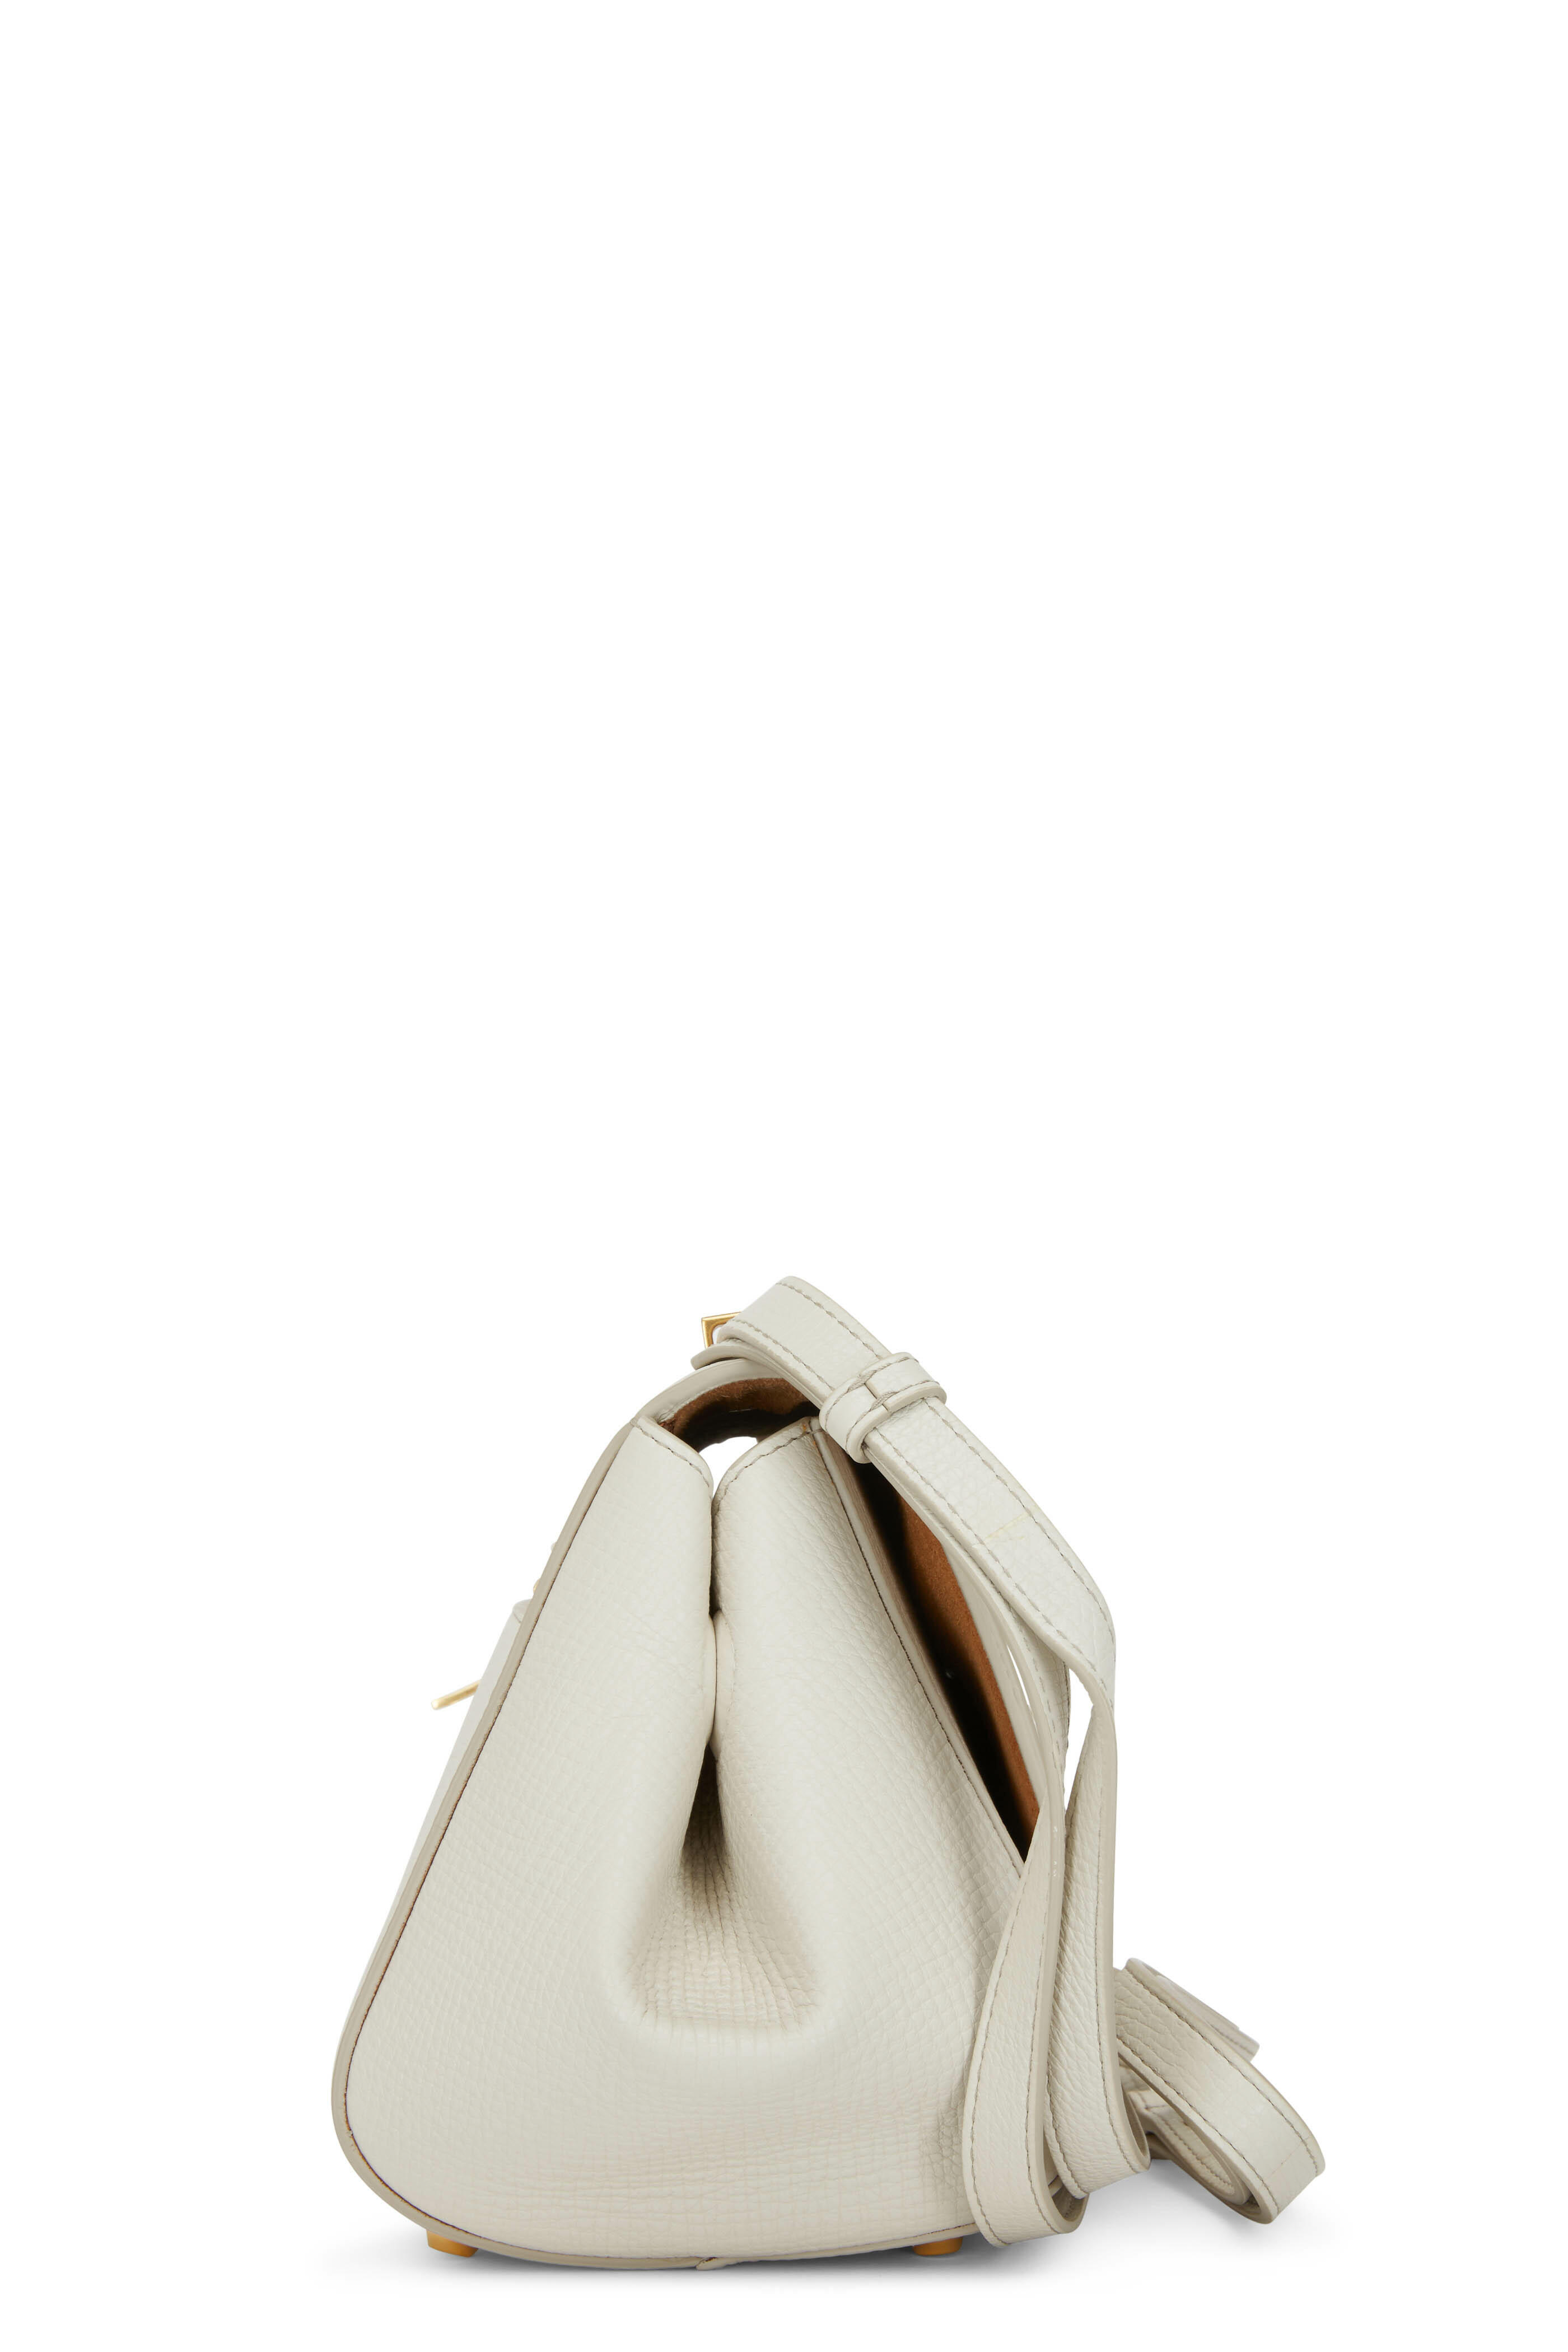 Bottega Veneta Textured Calfskin Small BV Angle Shoulder Bag Black